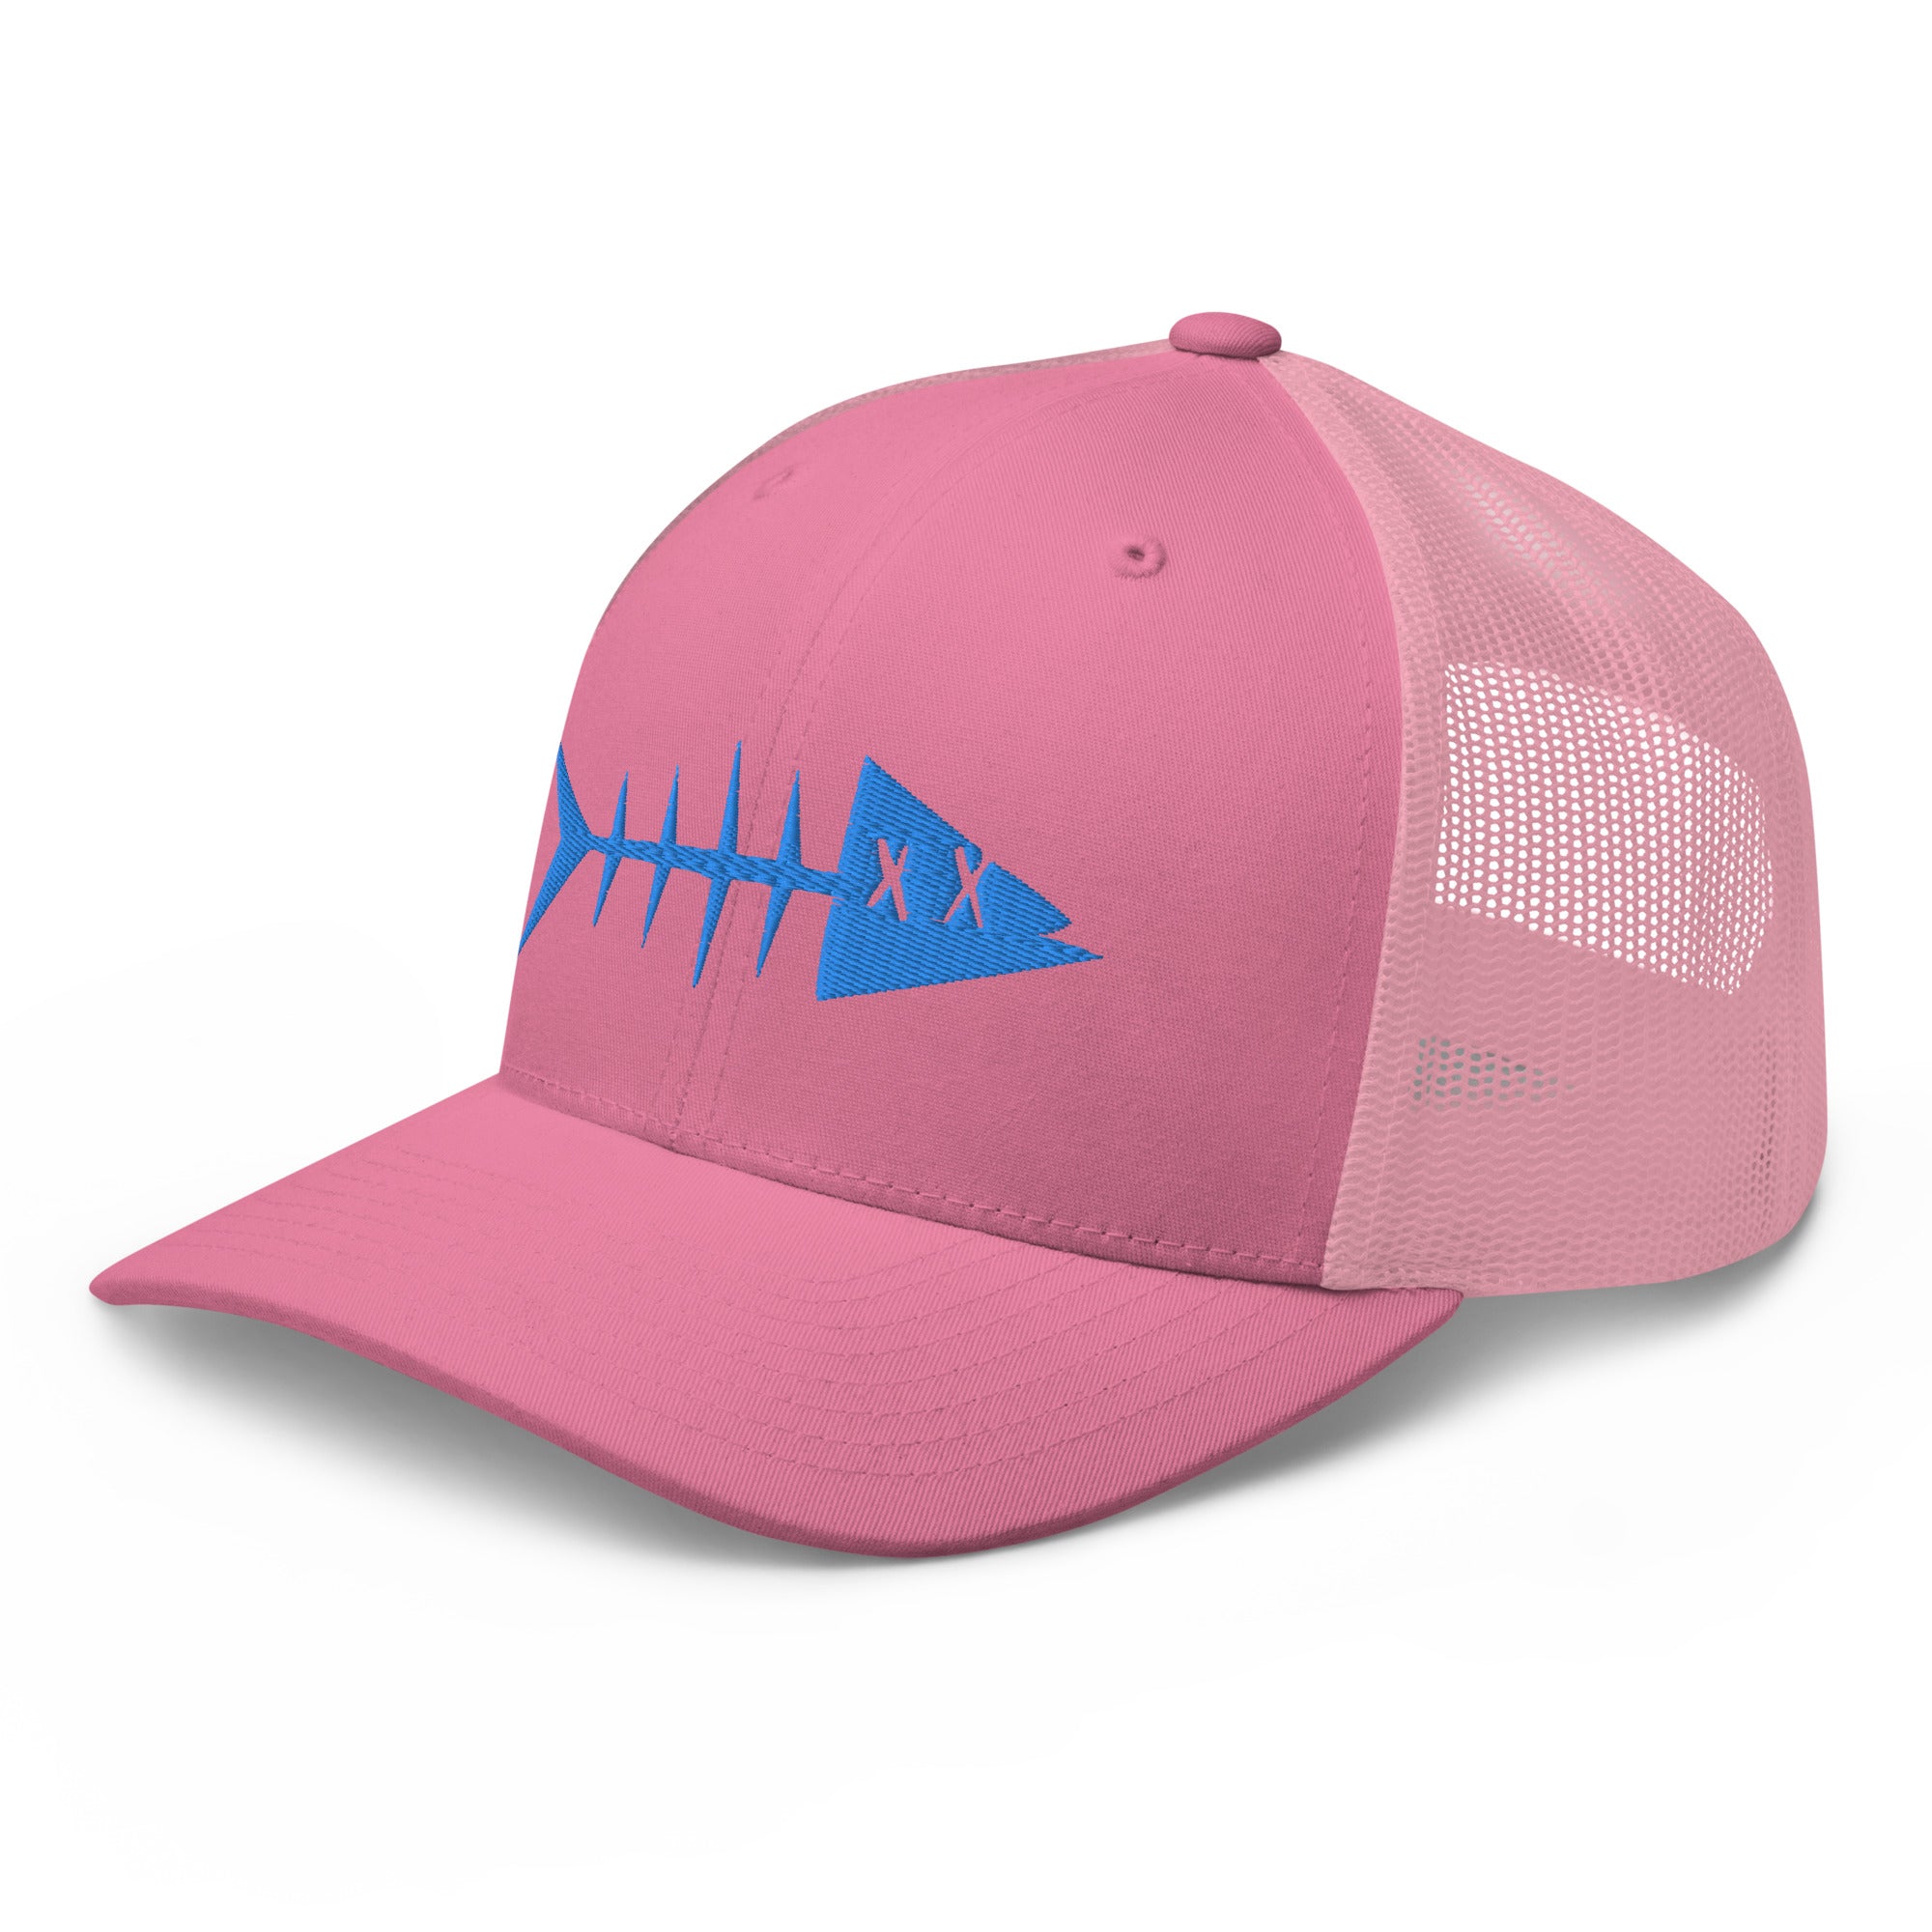 Clishirt© 3D Puff Embroidered Blue Fish  Snapback Hat Trucker Cap